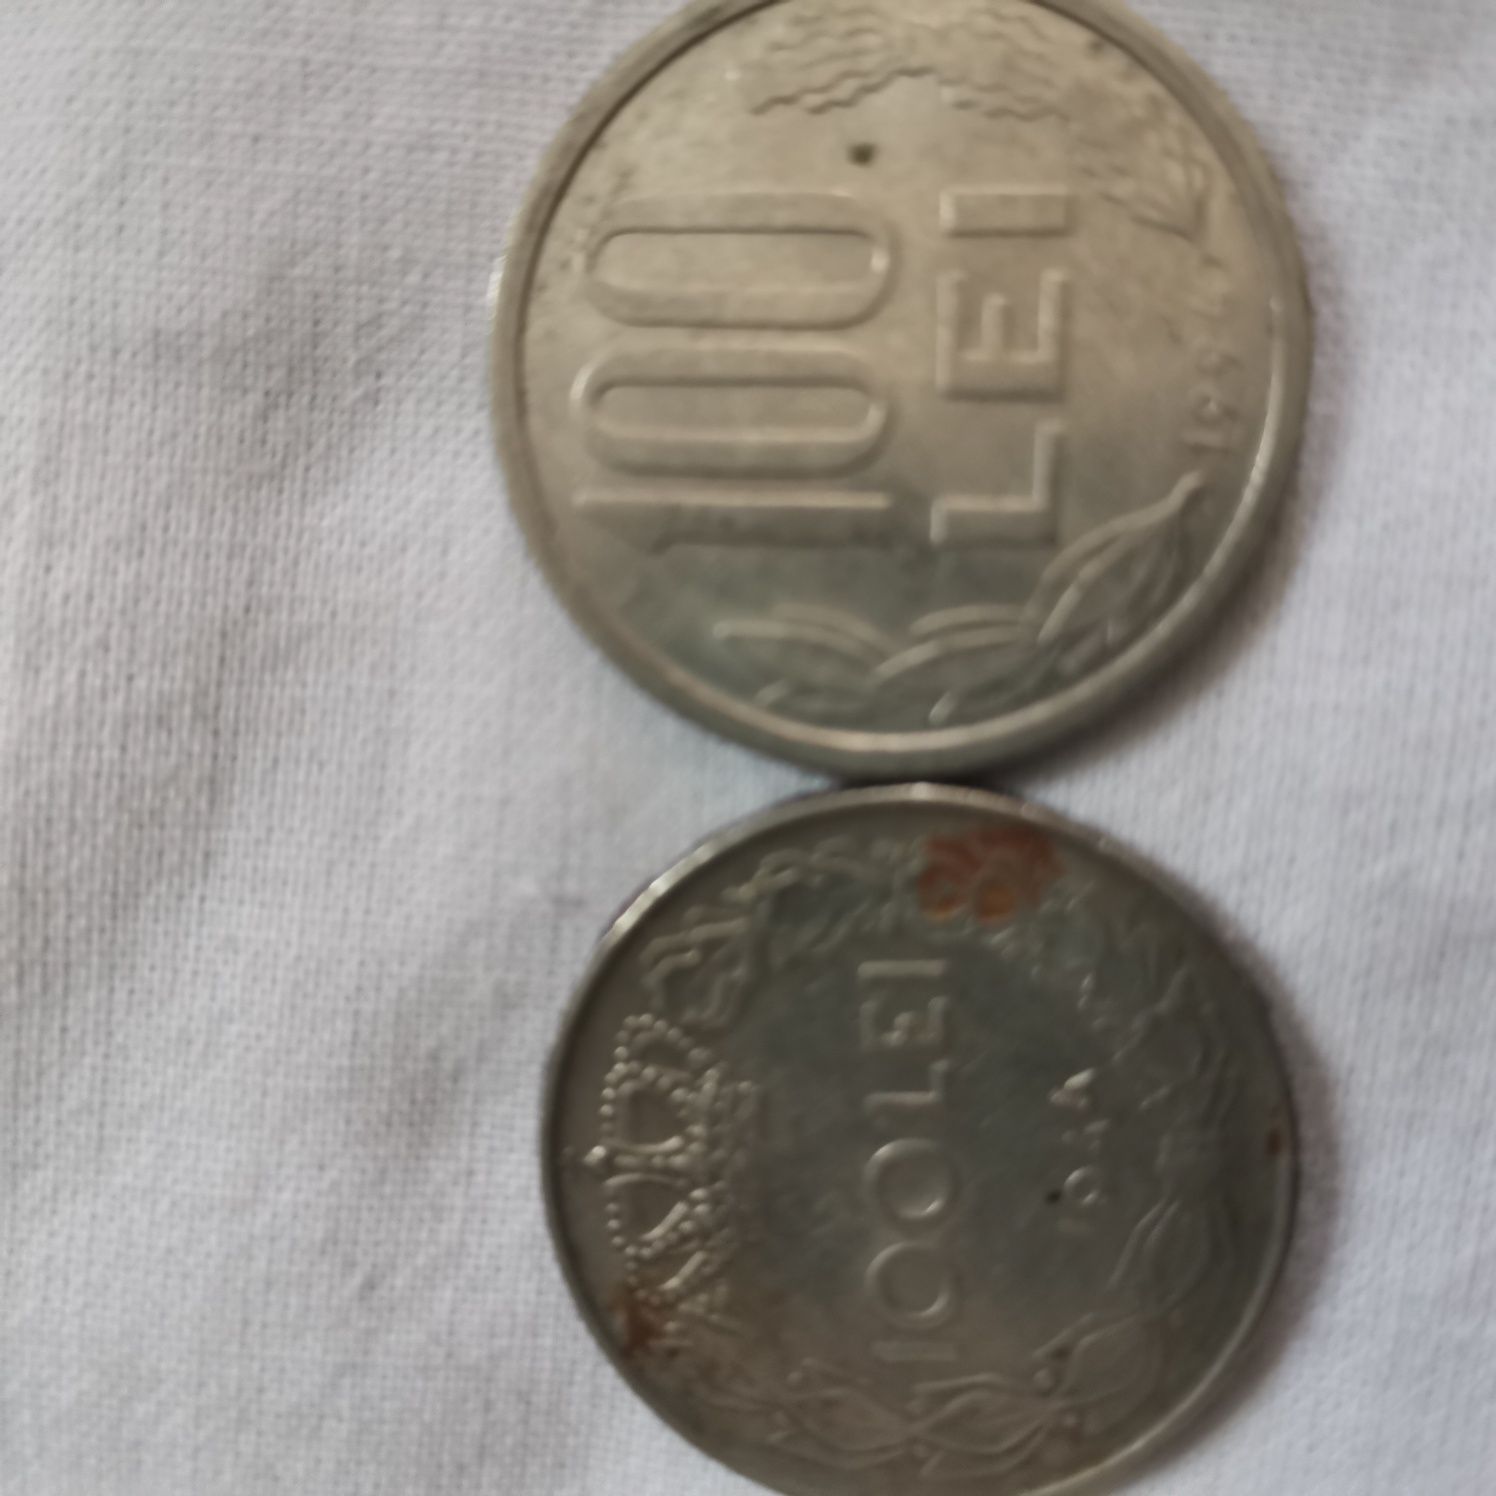 Monede vechi și valoroase